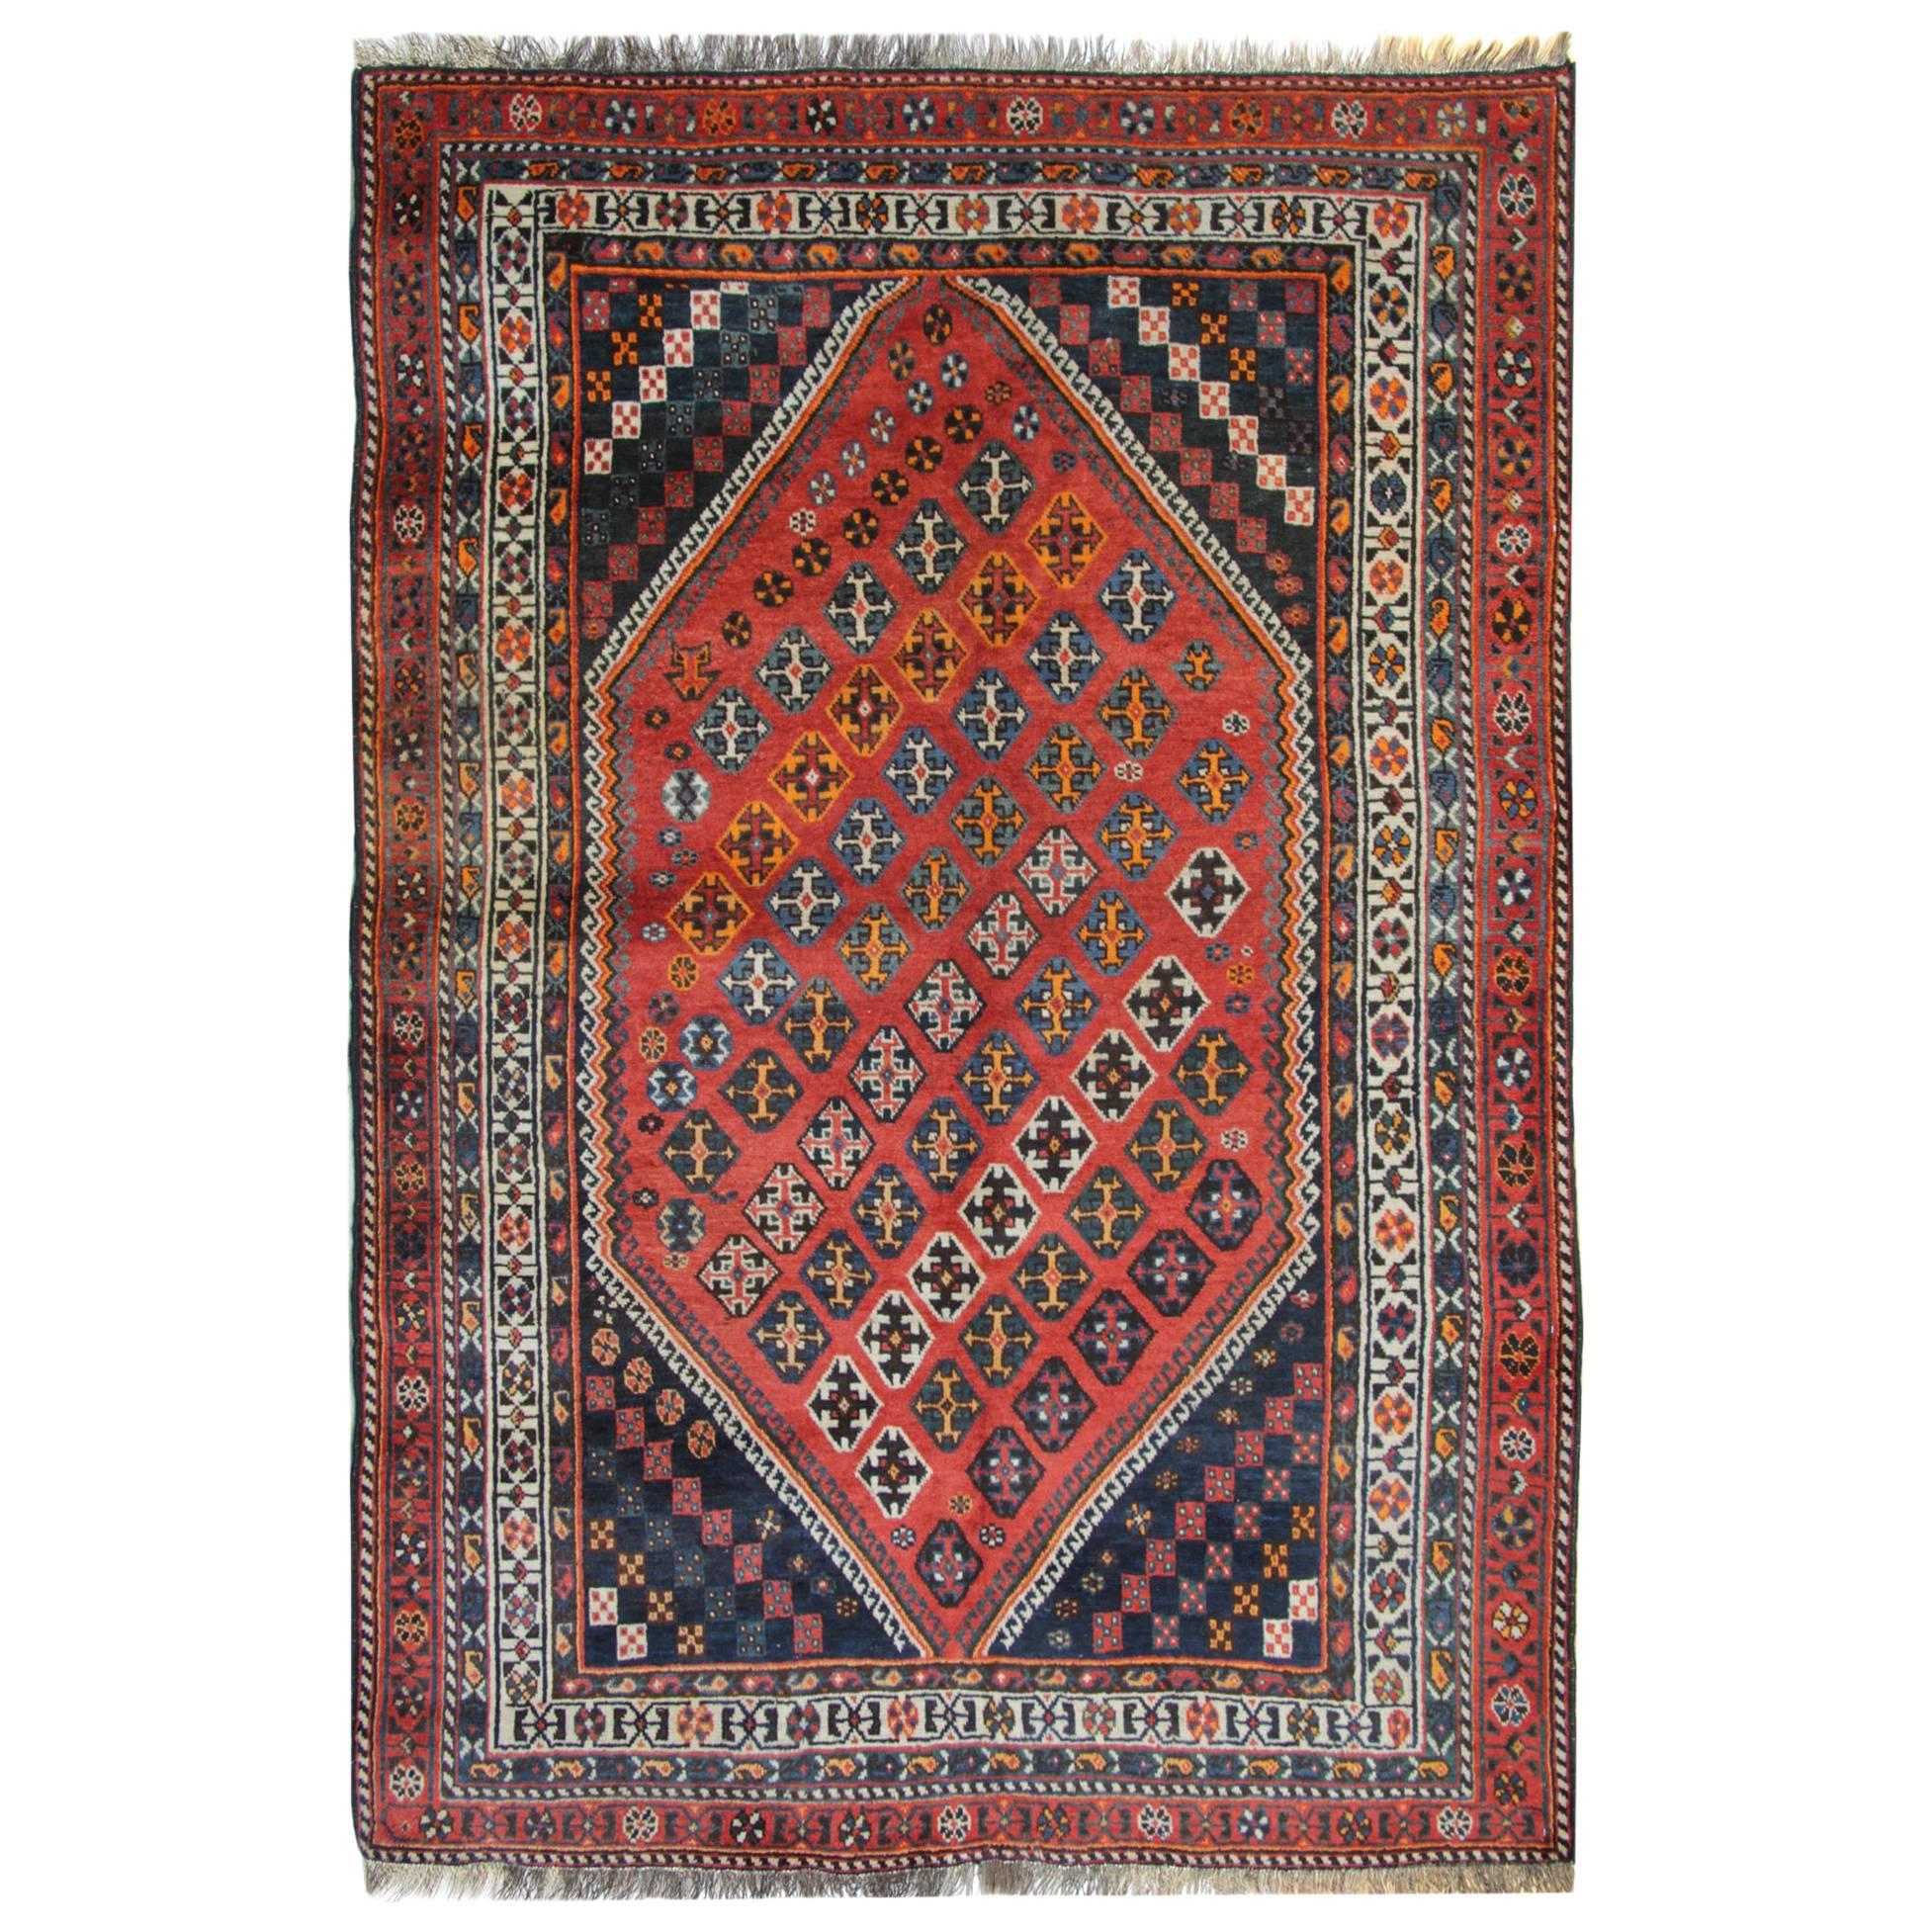 Antique Persian Rugs, Traditional Rugs, Lori Carpet from Shiraz